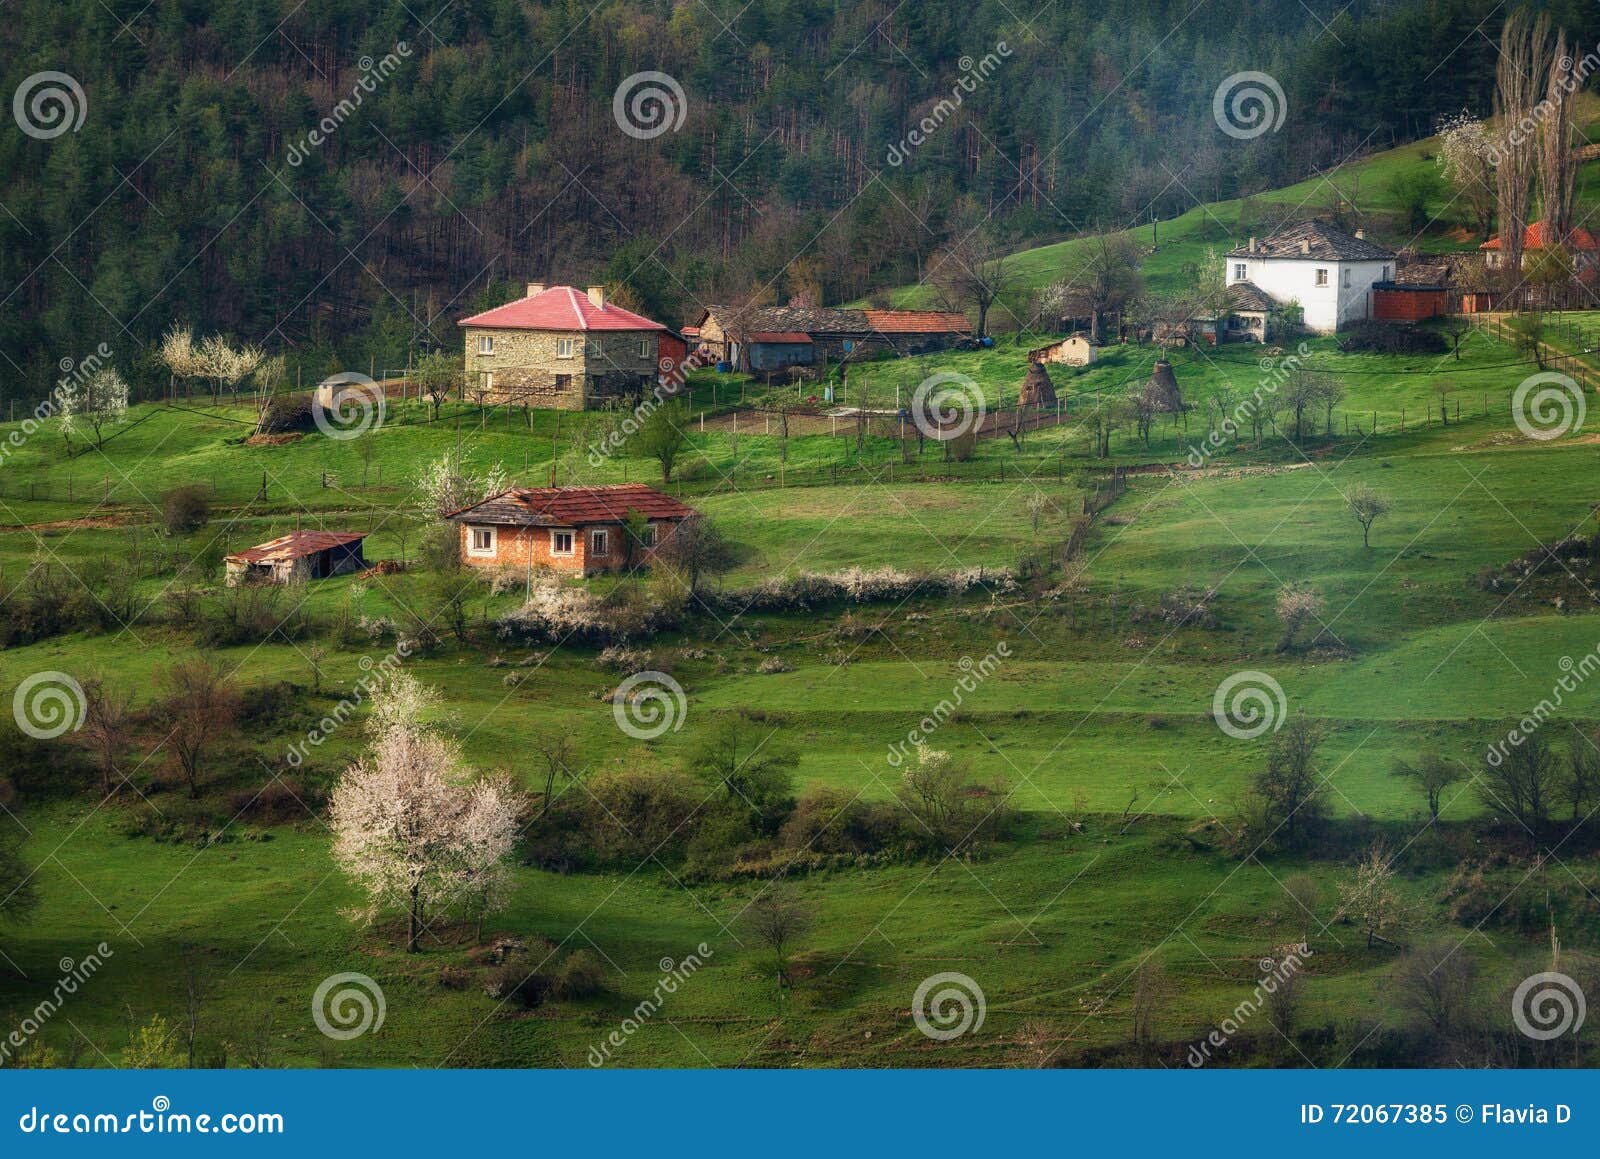 borovitsa village, eastern rhodopes, bulgaria